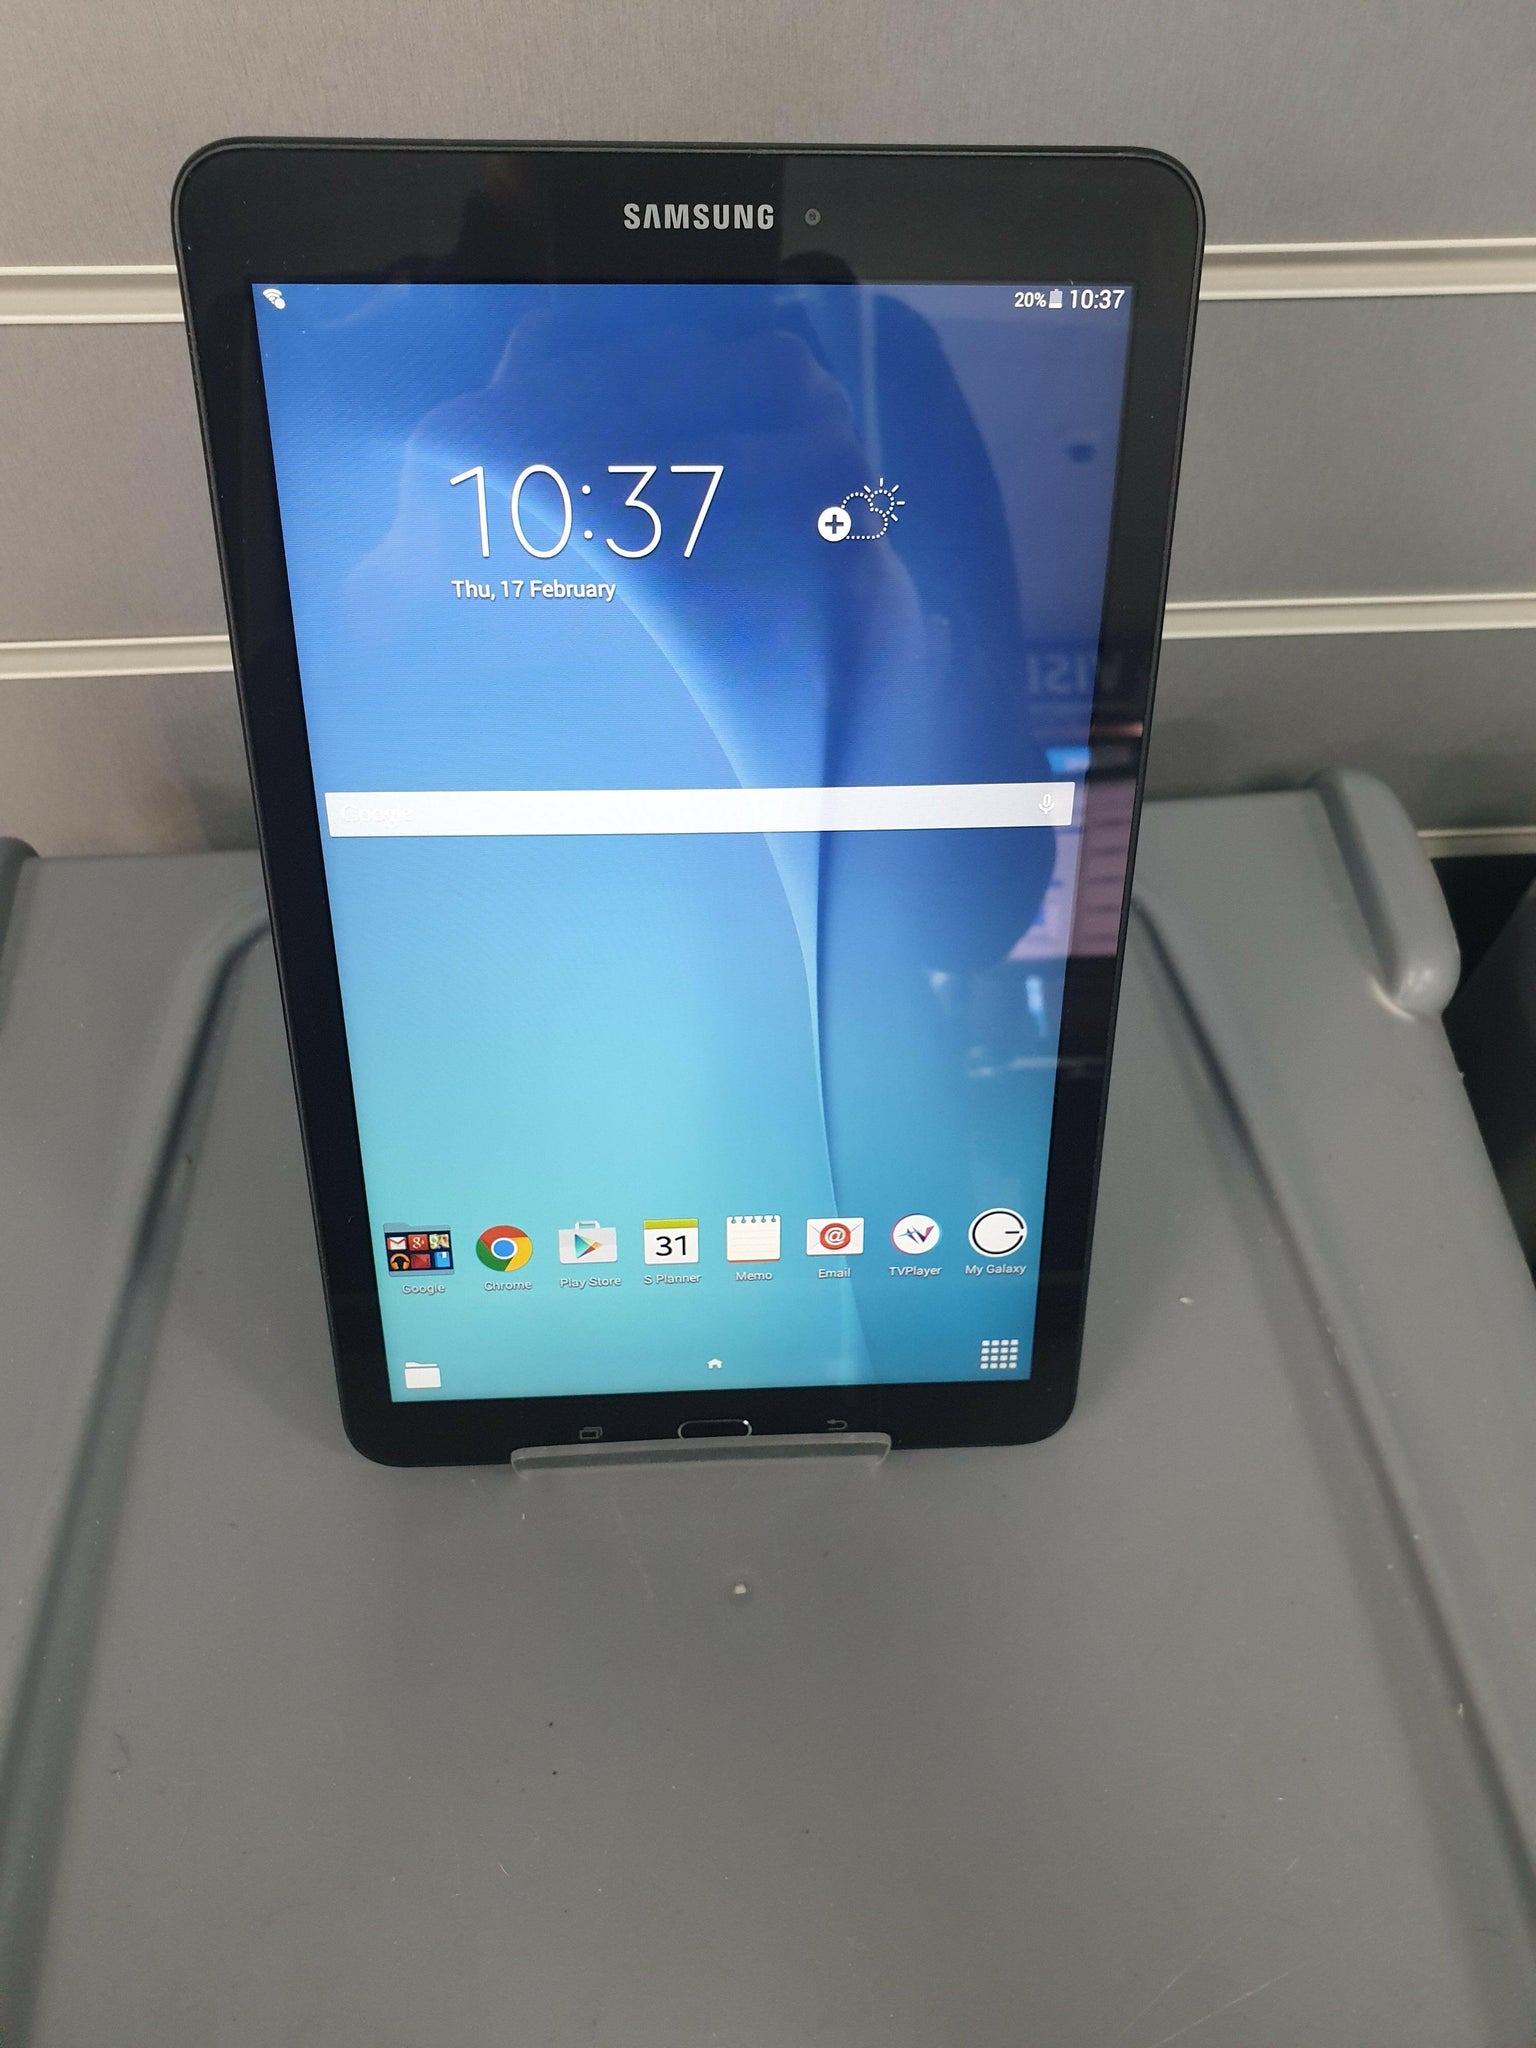 Samsung Galaxy Tab E 9.6" Tablet - 8 GB, Black WIFI